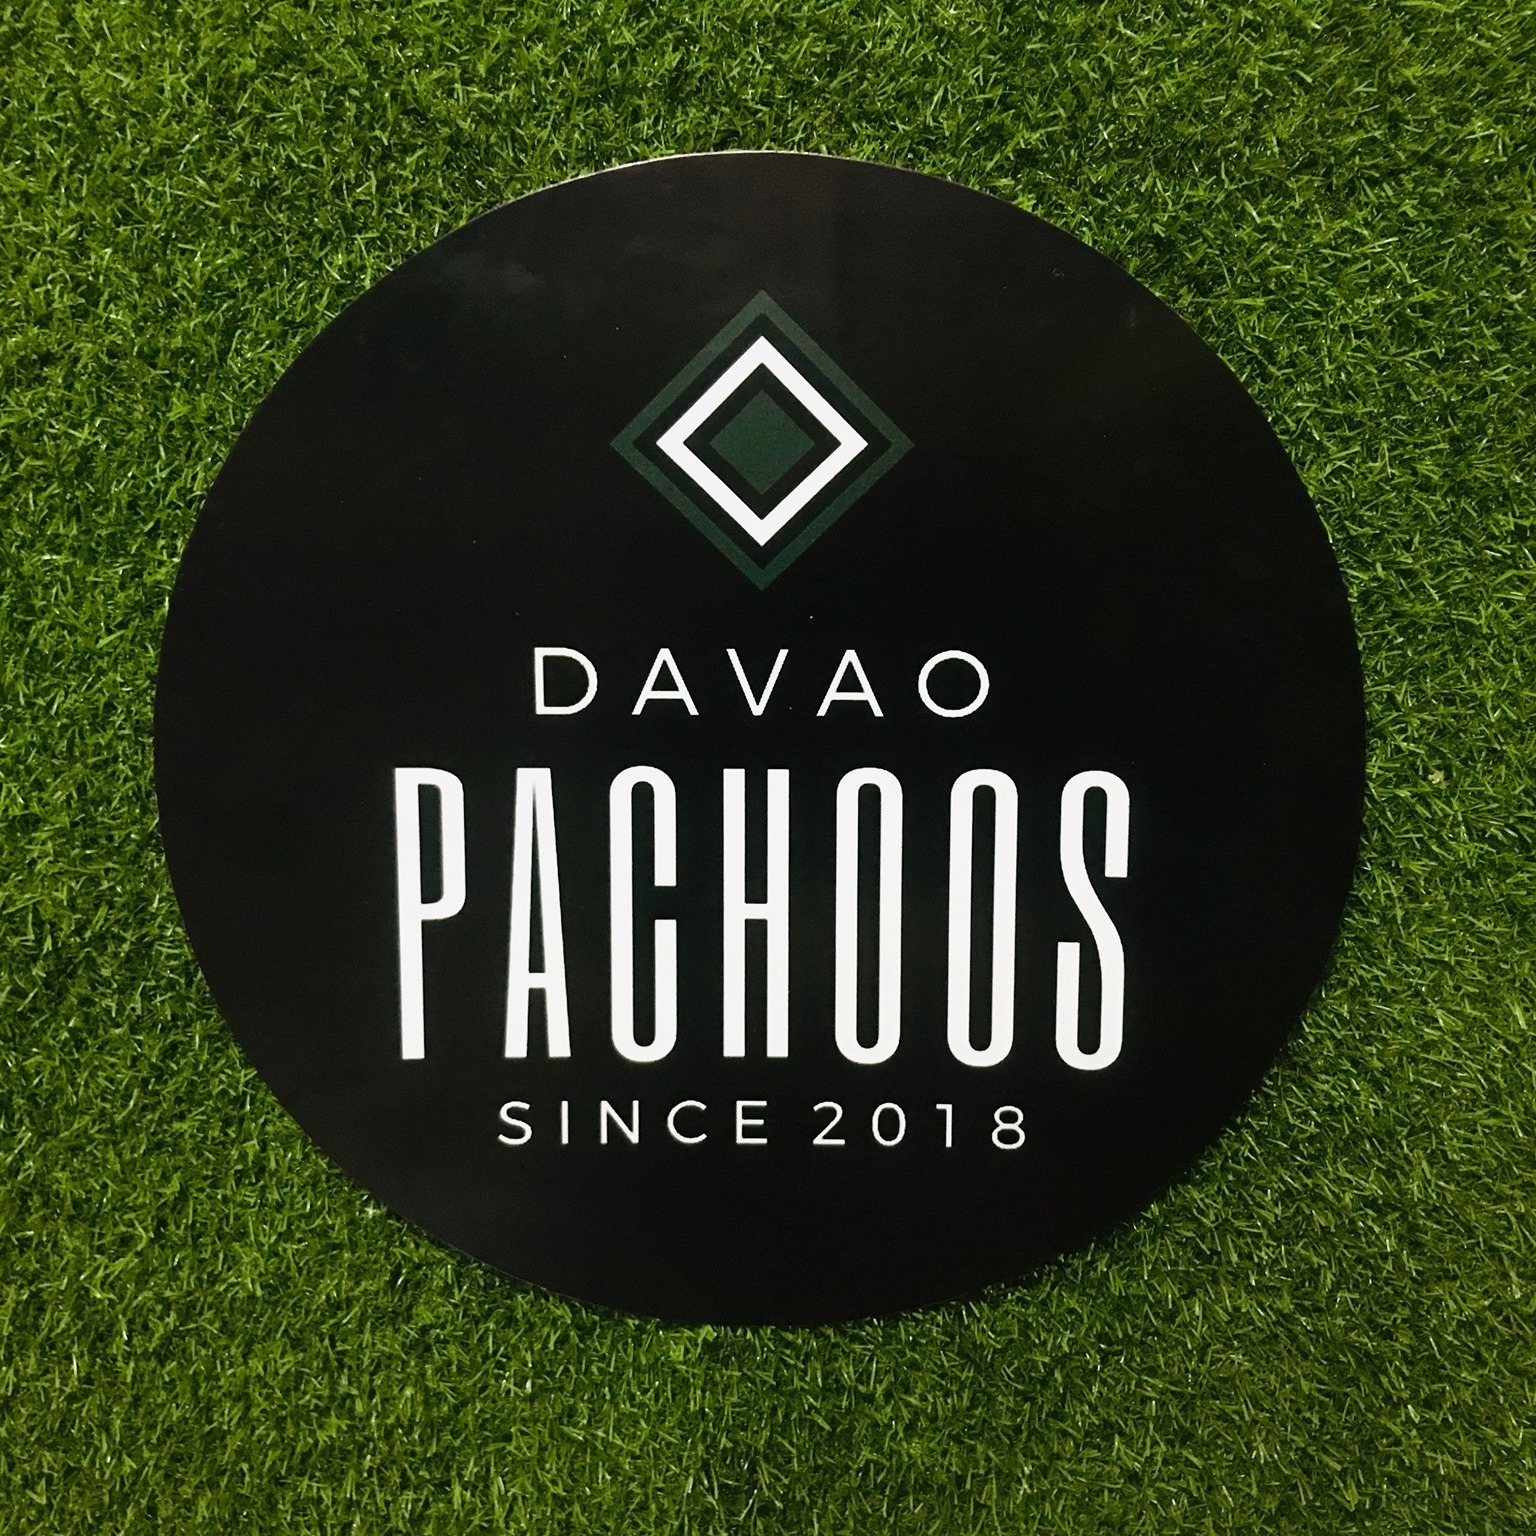 Davao Pachoos 1 profile